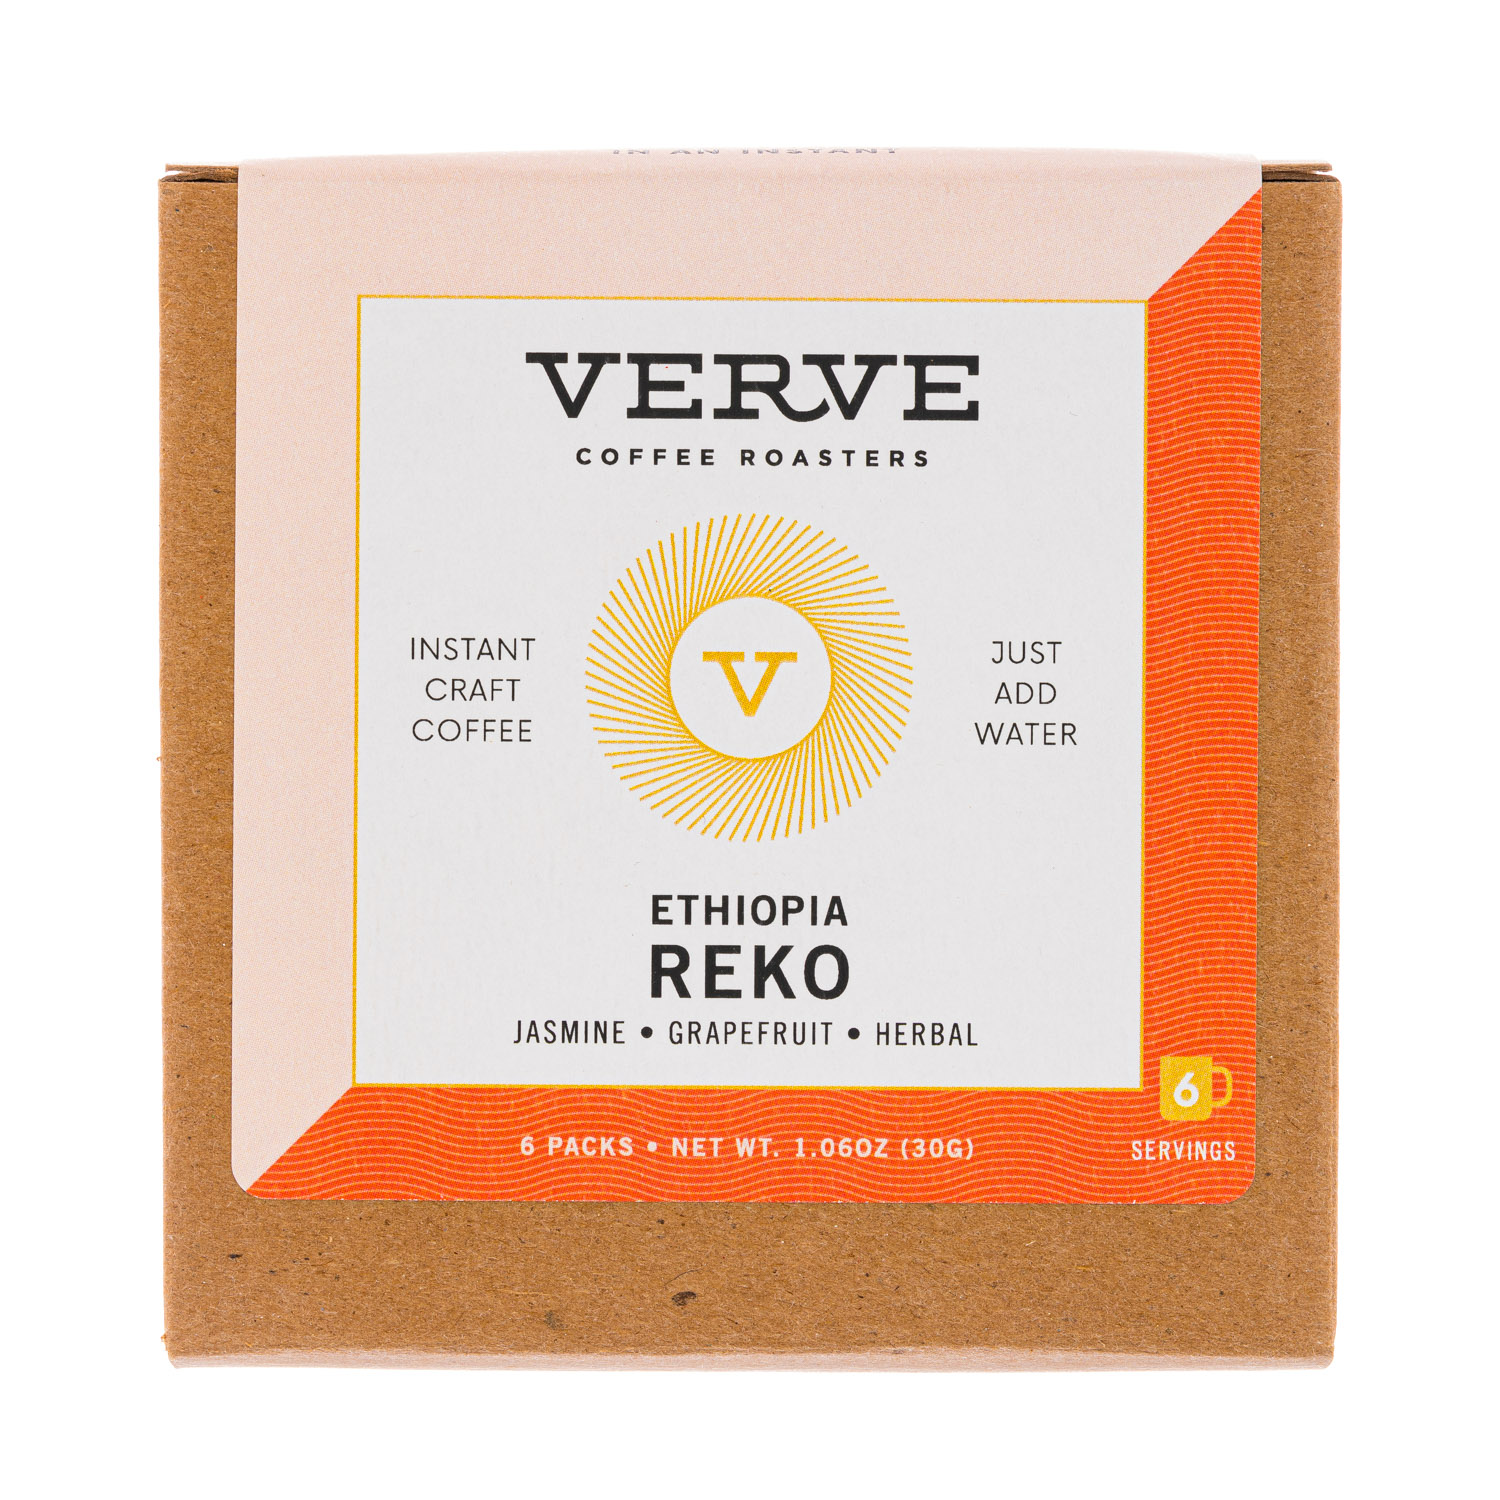 Ethiopia Reko (6 servings box)